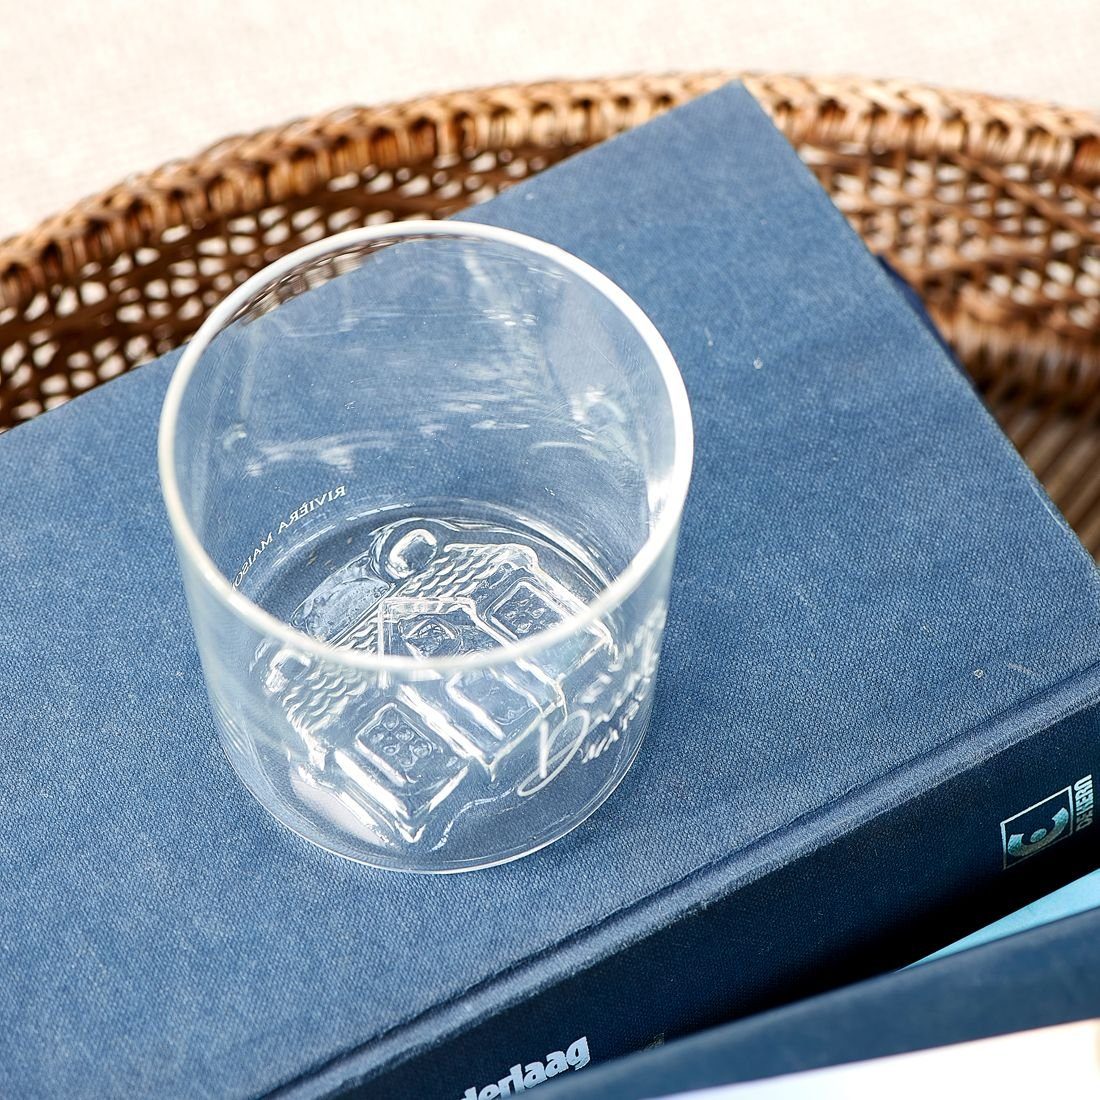 Rivièra Trinkglas, Drinks Glas Glas Glass RM Maison